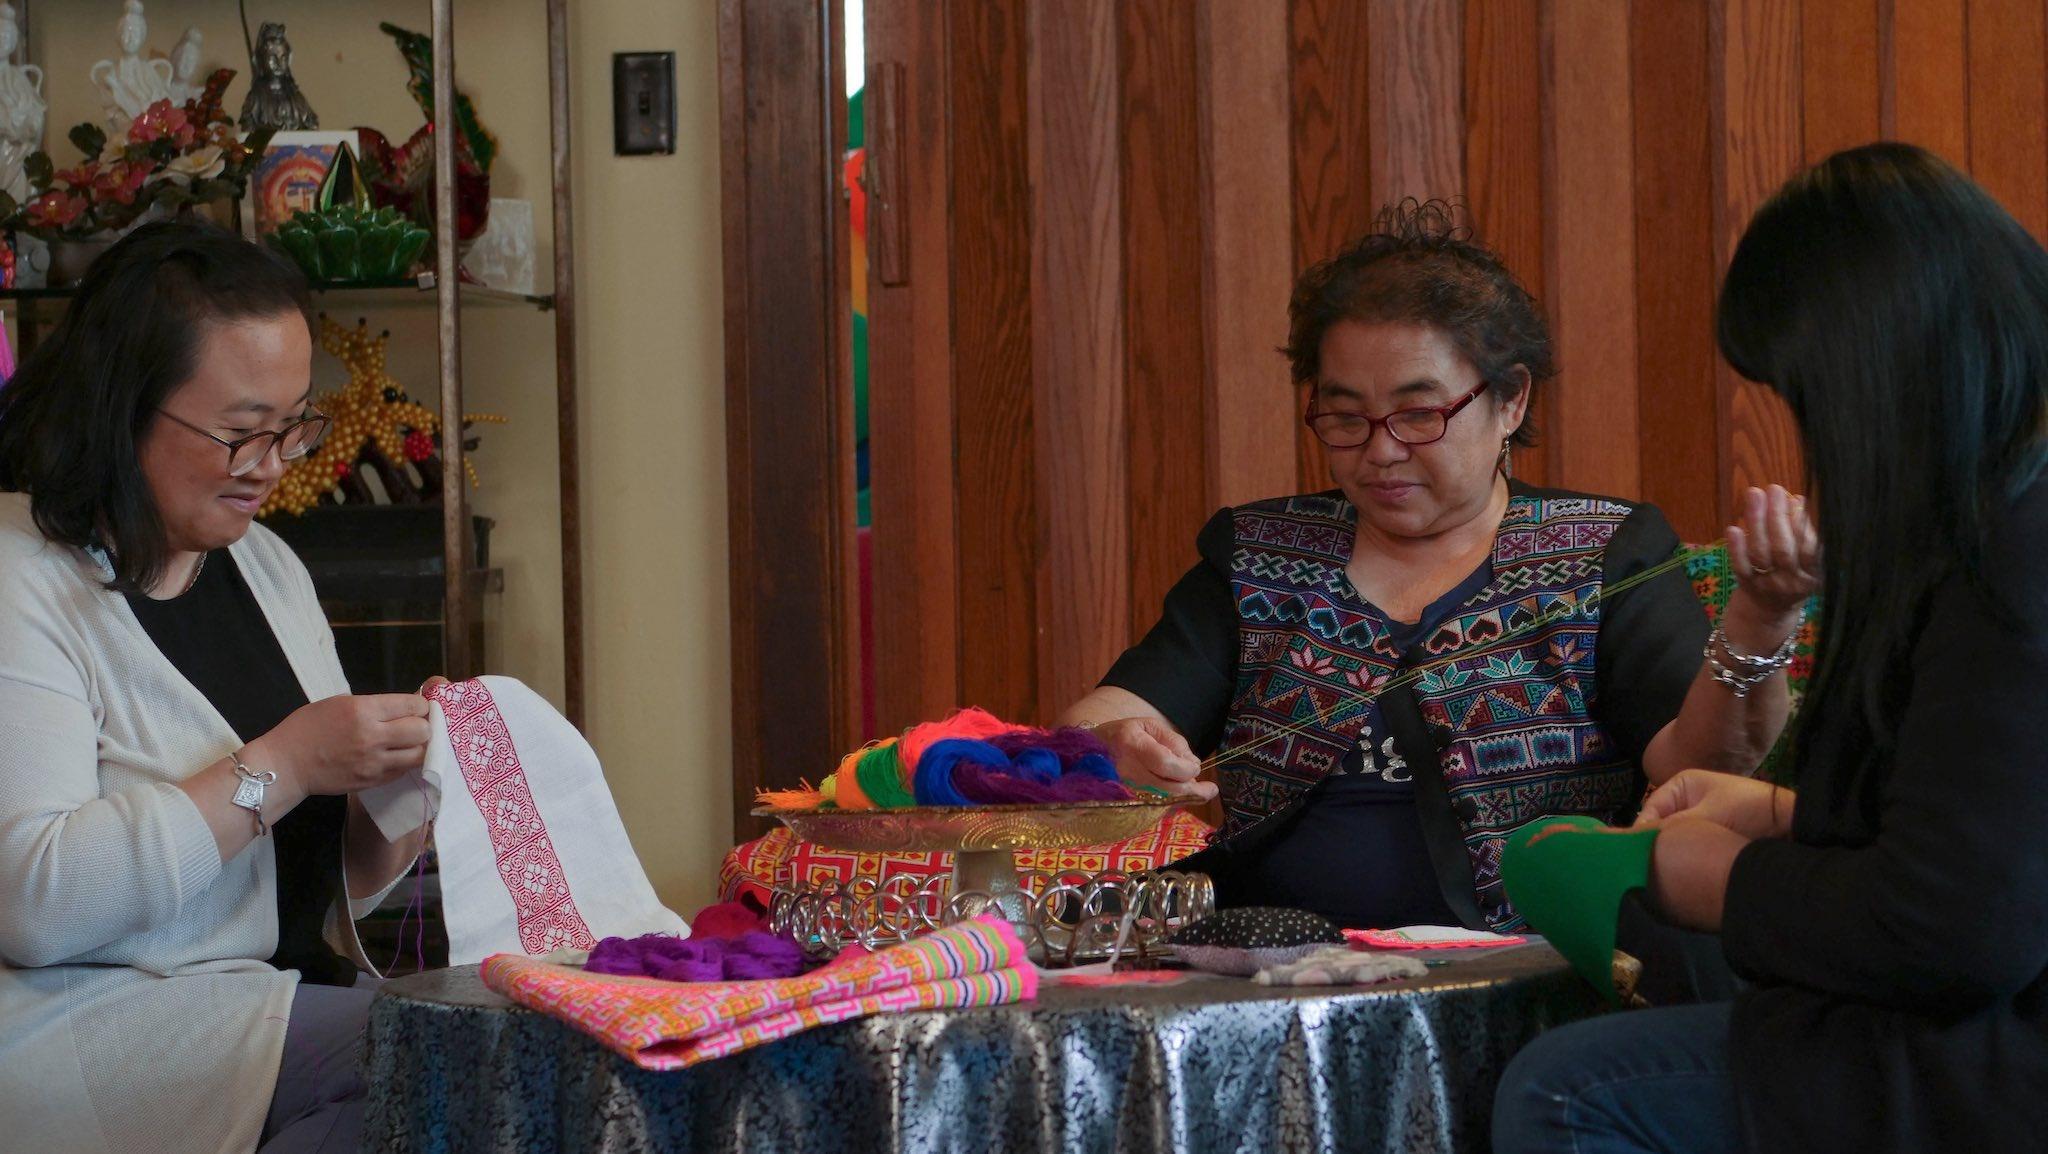 Hmong women embroidery paj ntaub (flower cloth embroidery)